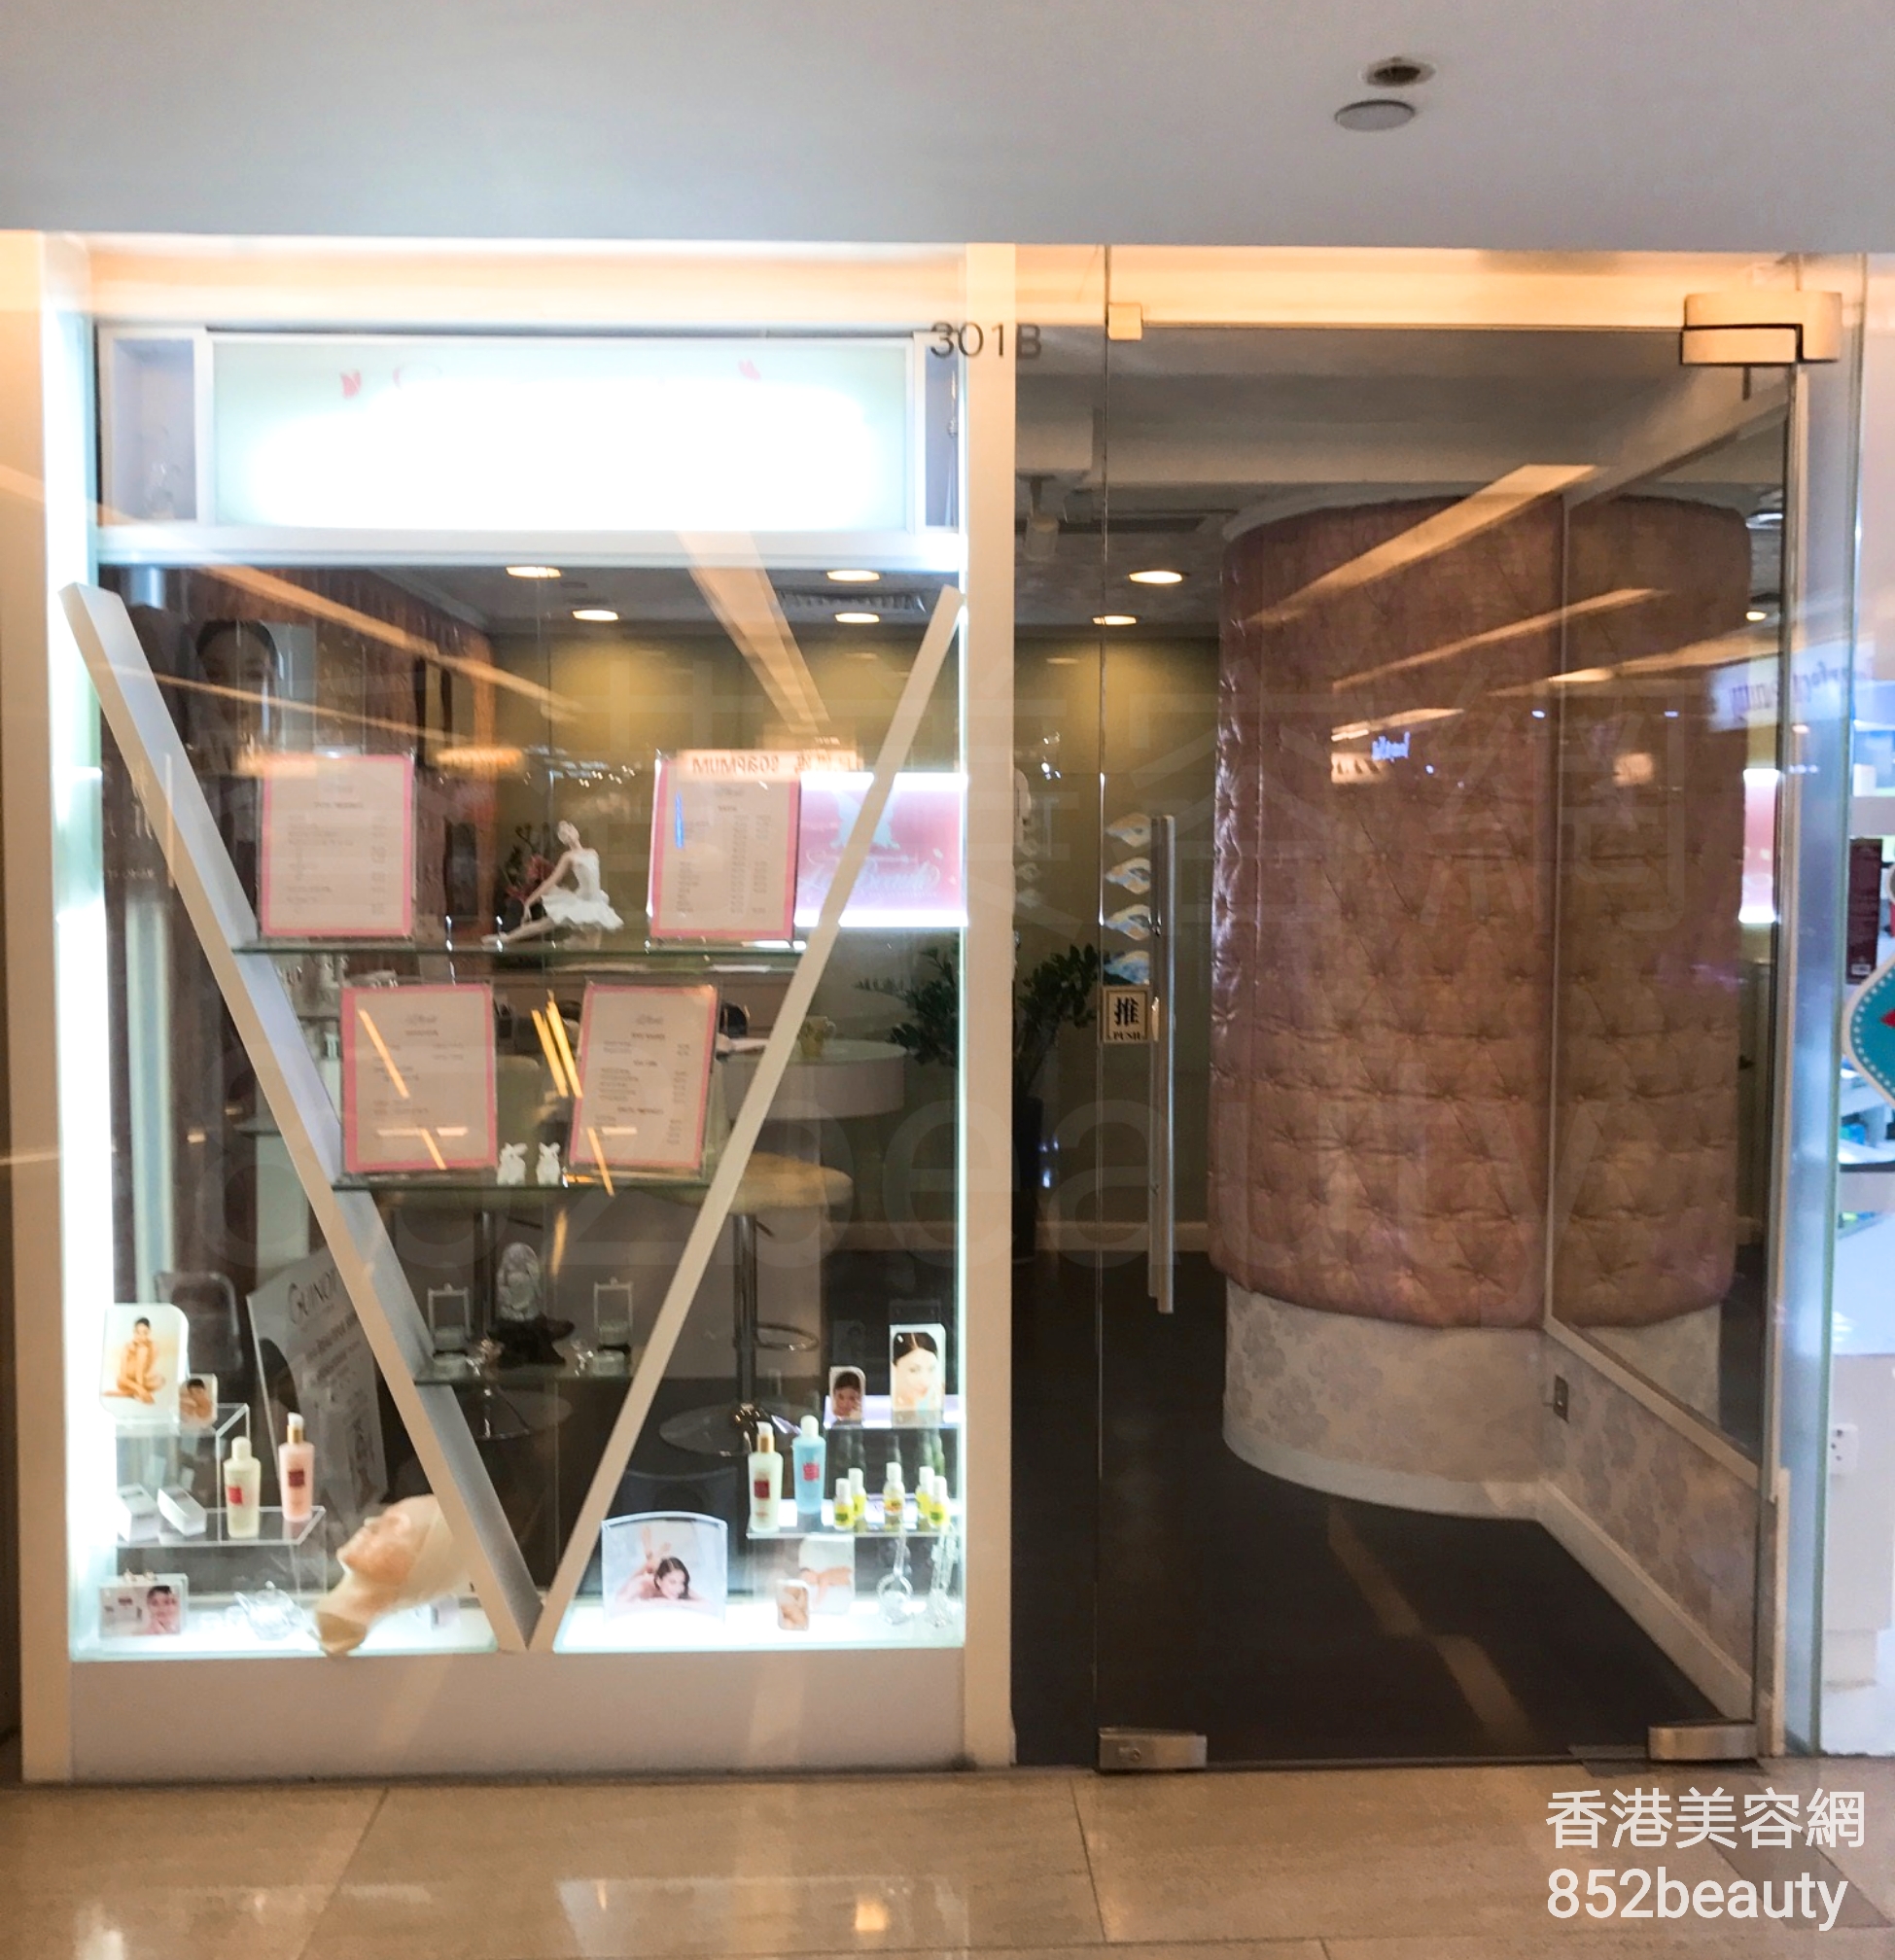 香港美容網 Hong Kong Beauty Salon 美容院 / 美容師: La Beauty